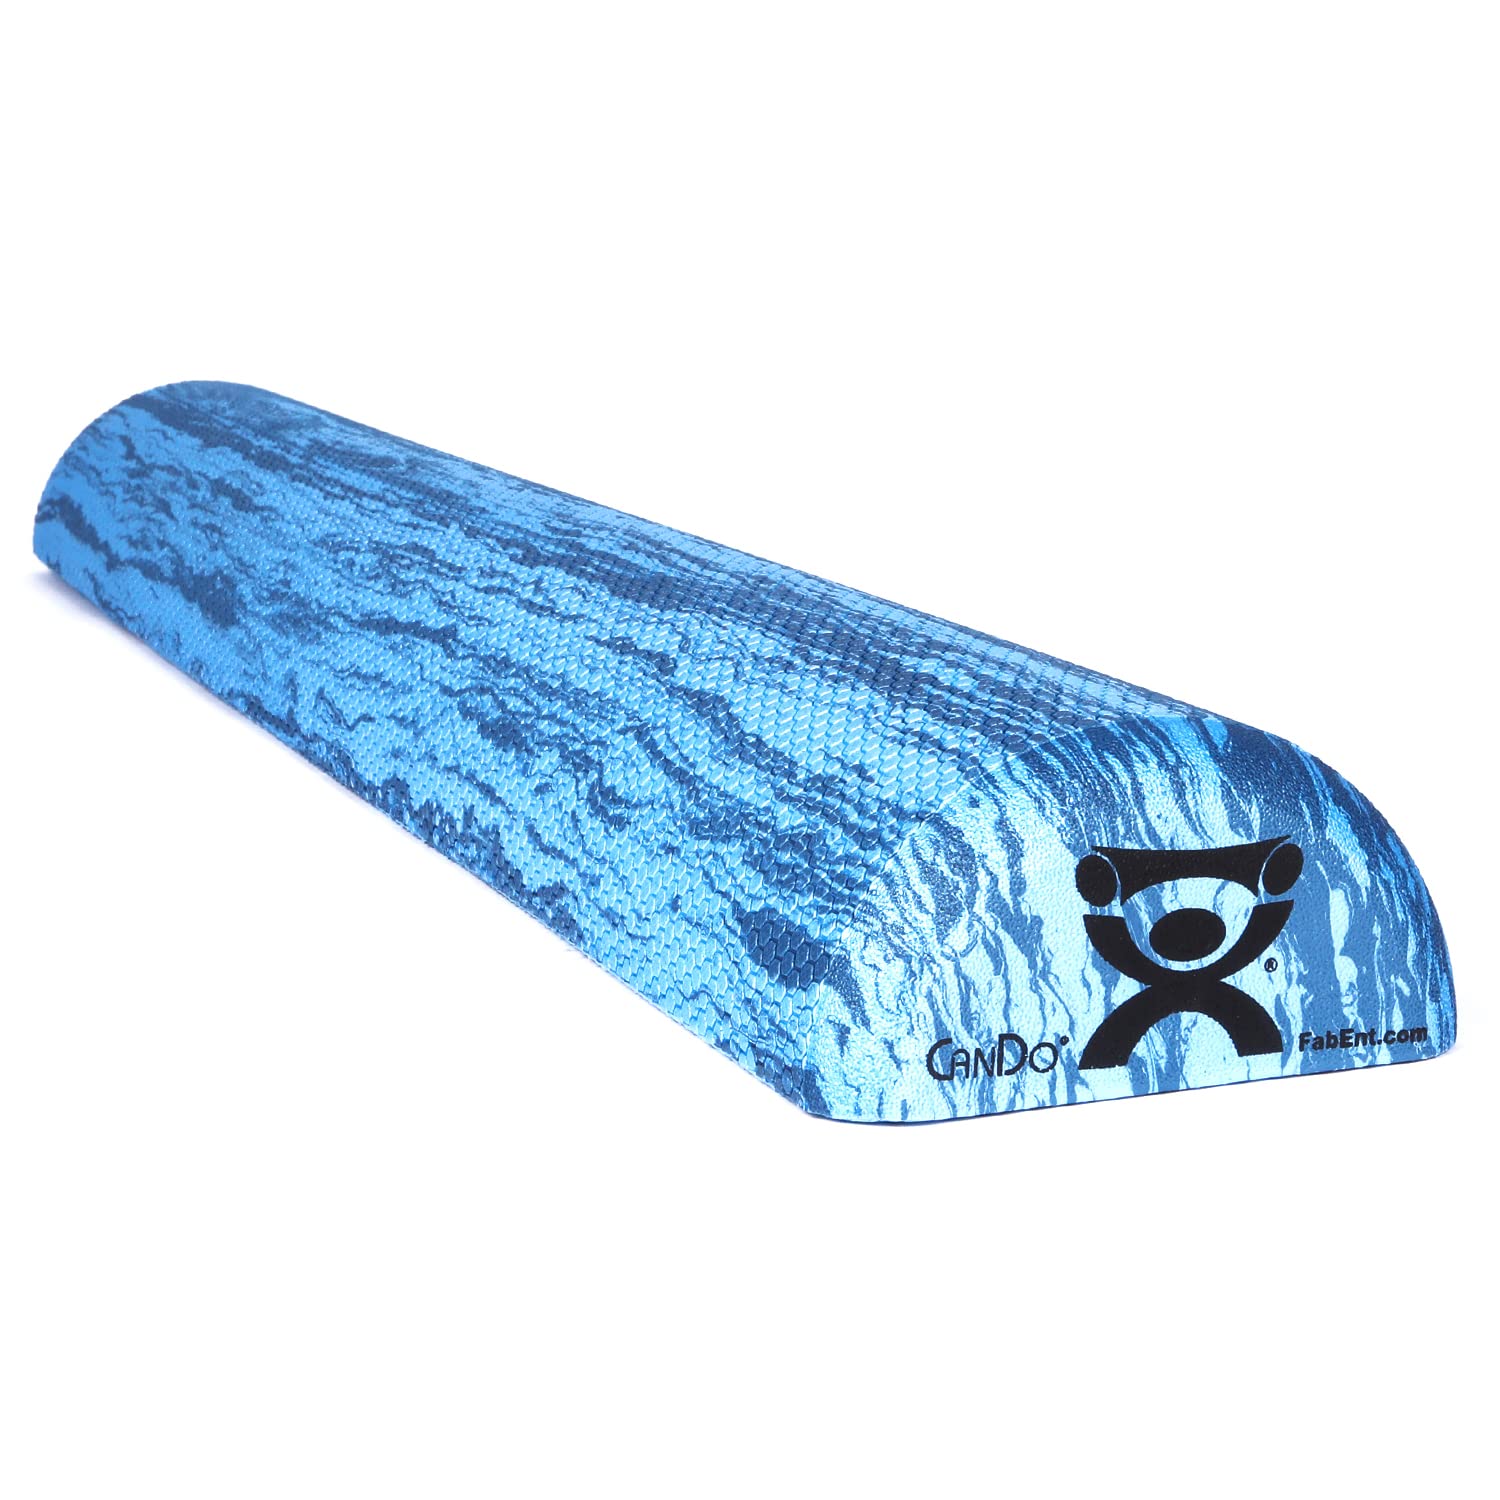 6" X 36" CanDo Heavy Duty EVA Half Round Foam Roller Myofascial Release Tool $4 + Free Shipping w/ Prime or on $25+